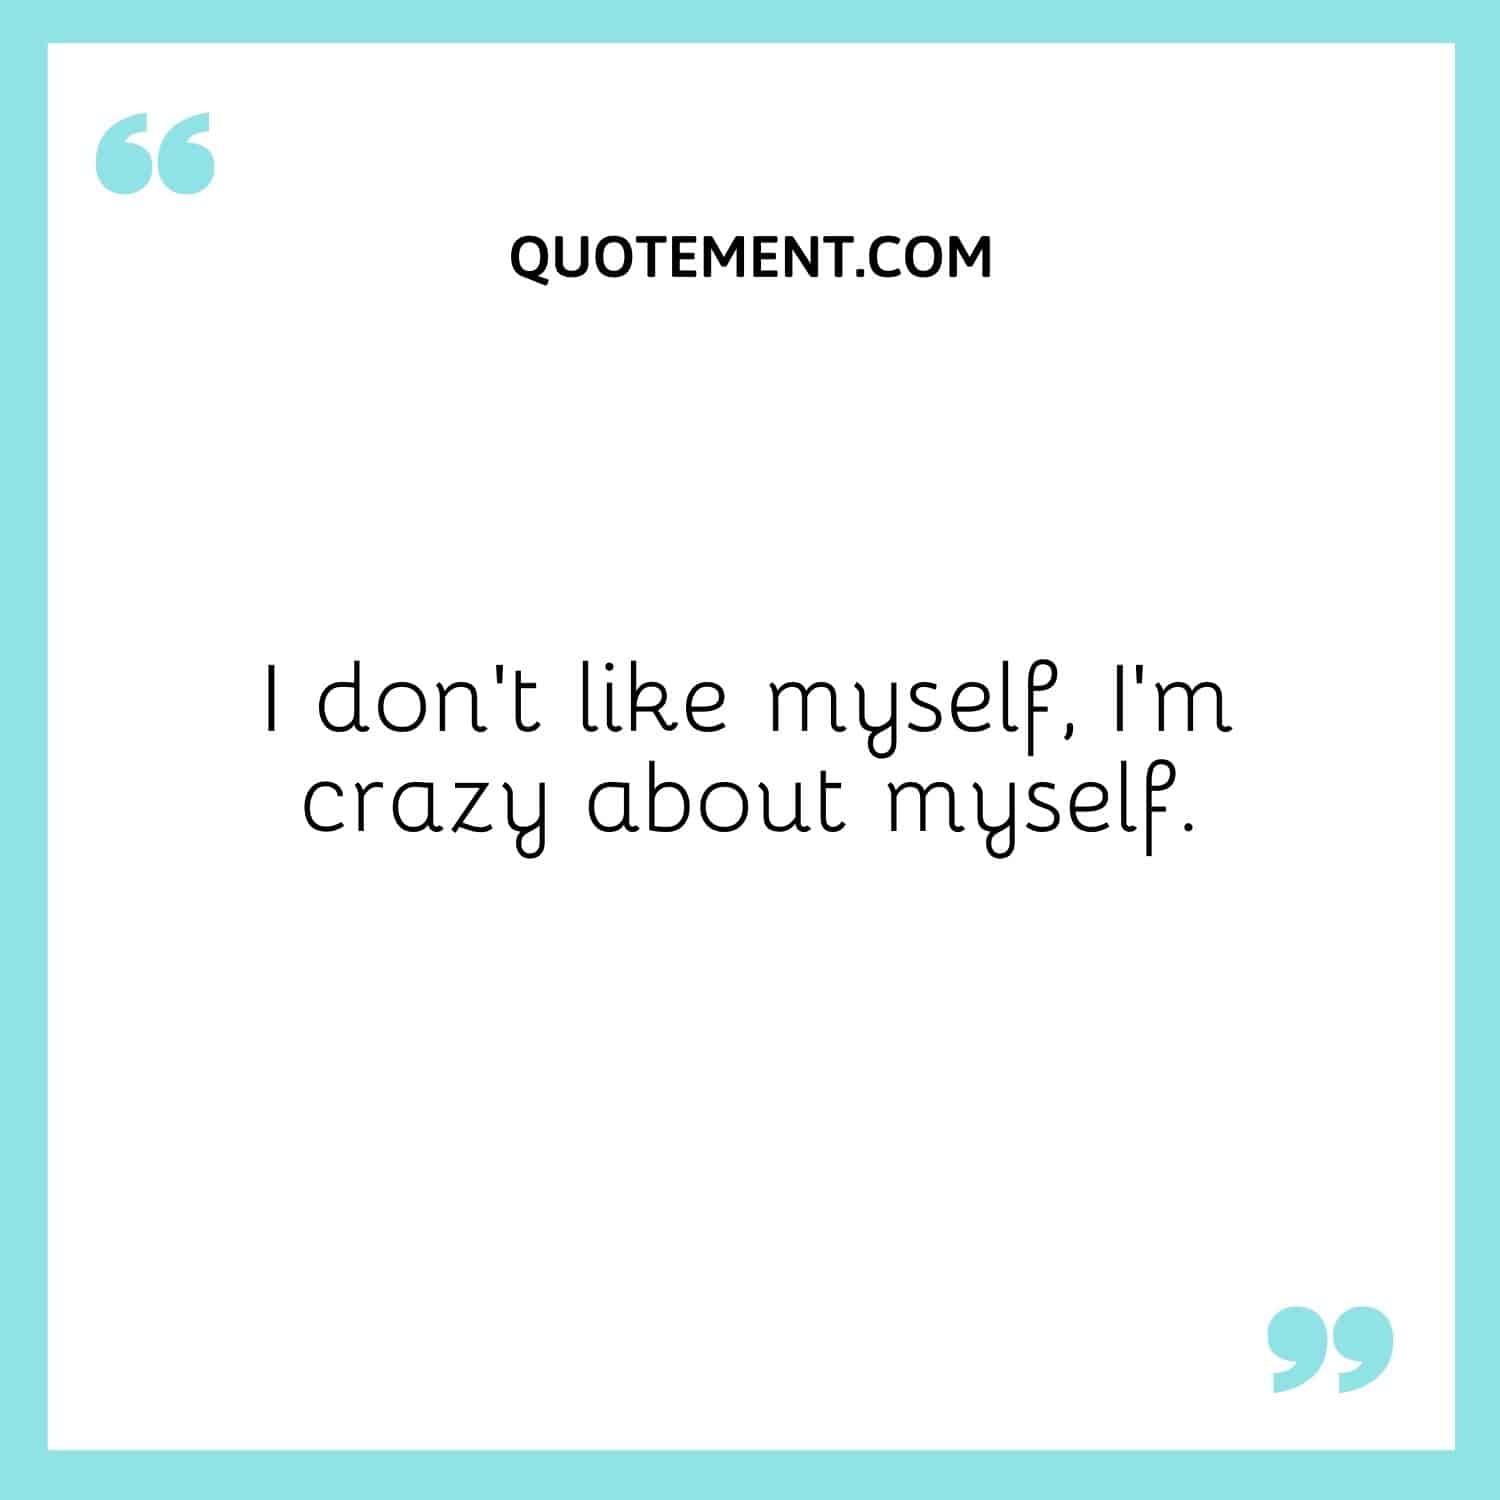 I’m crazy about myself